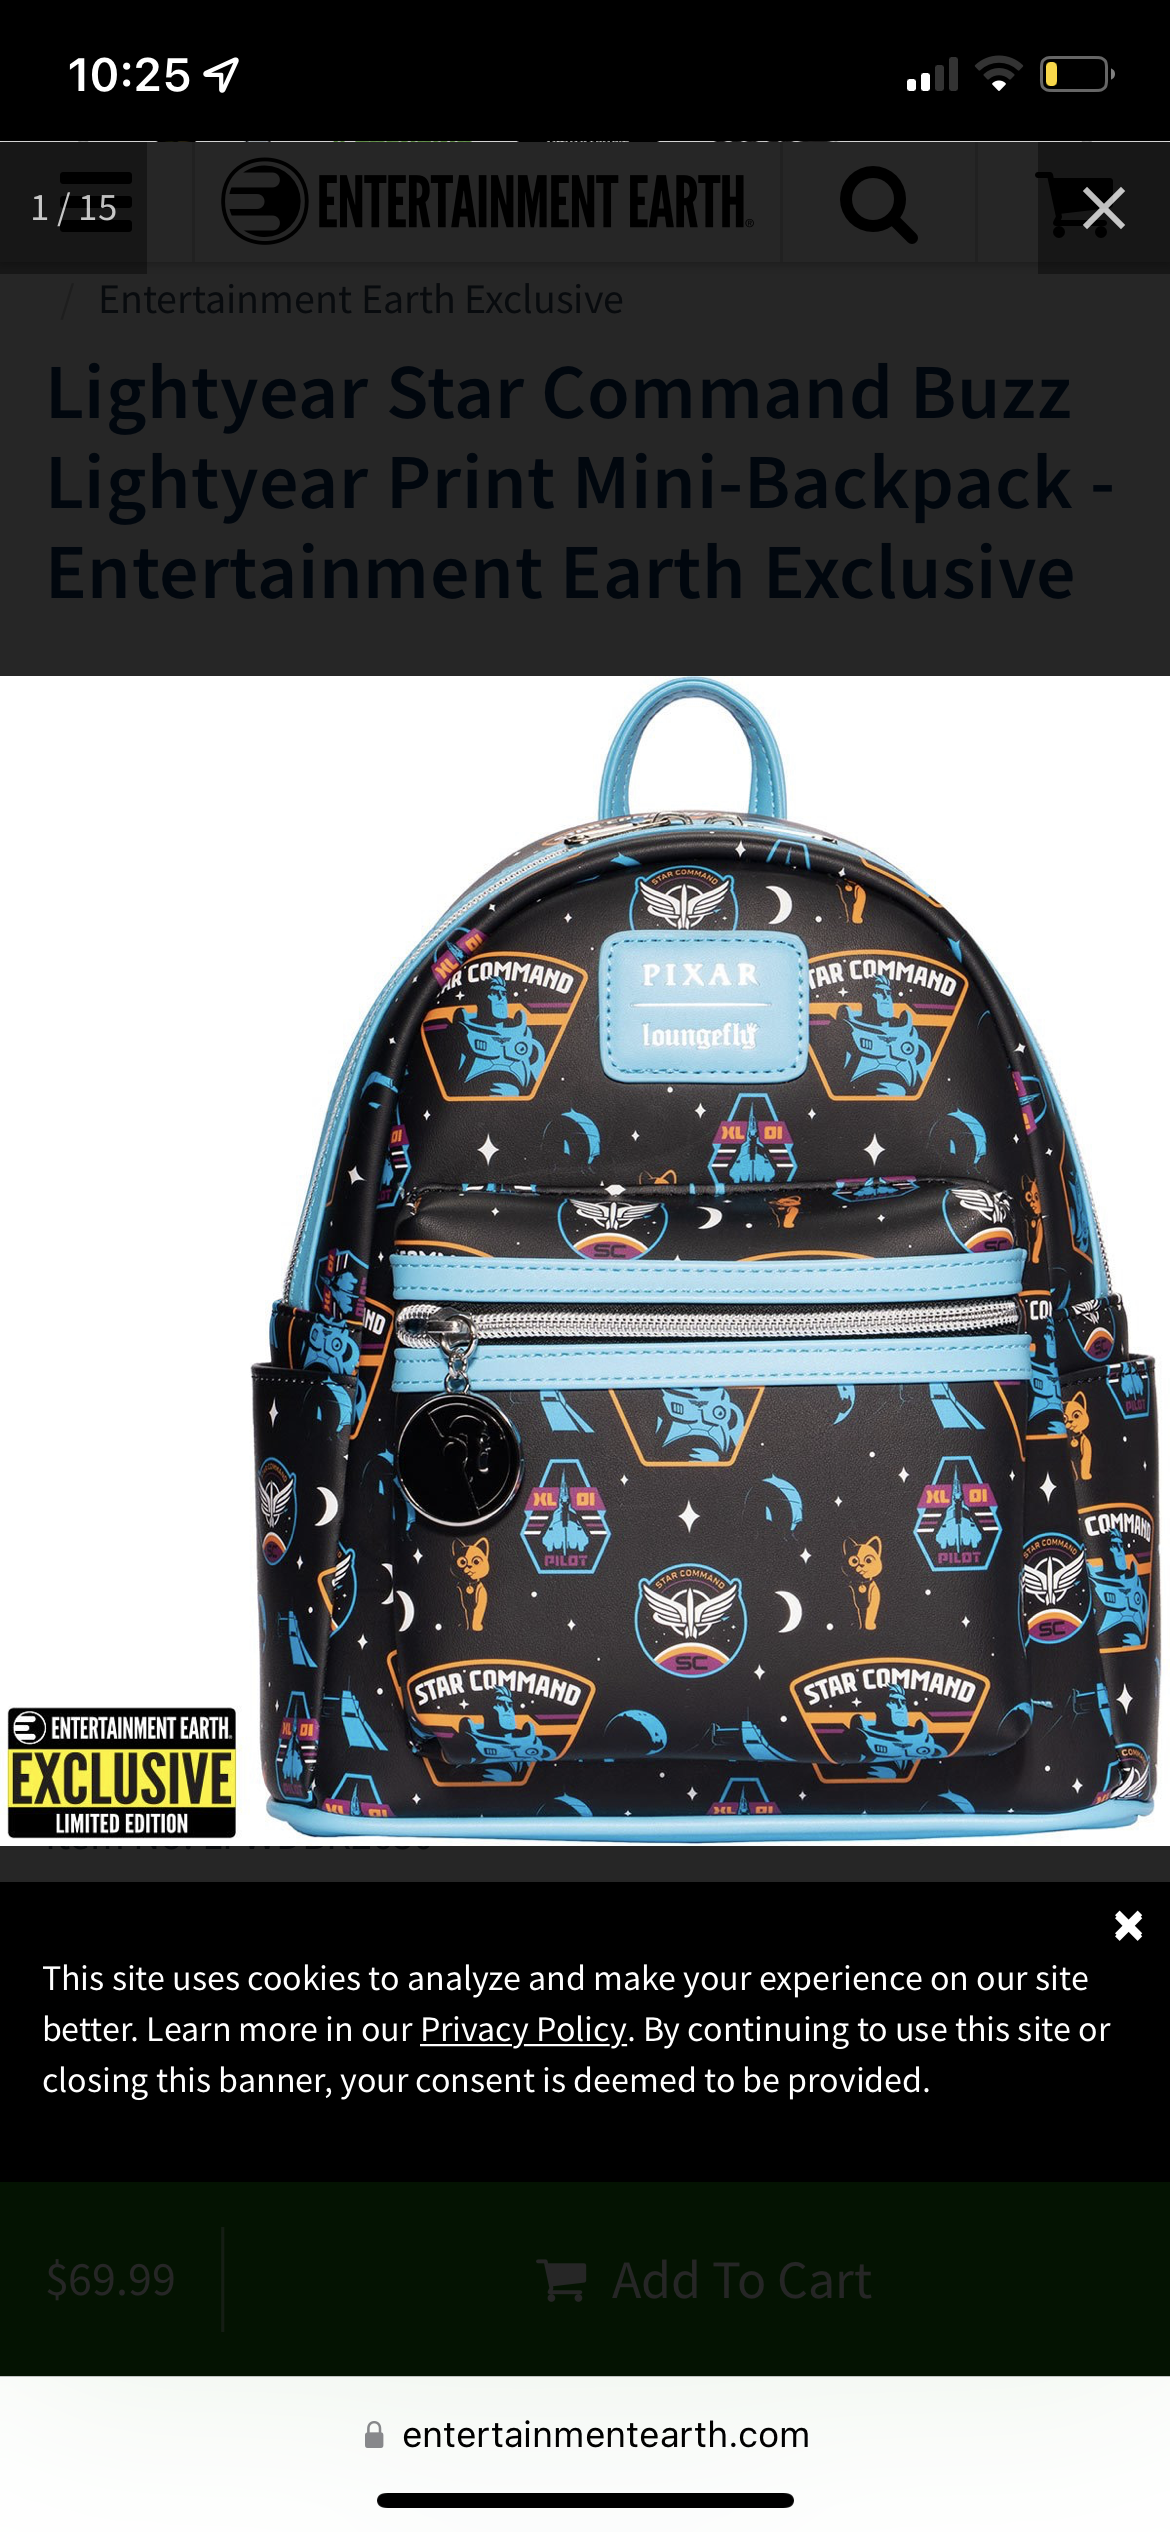 Lightyear Star Command Buzz Lightyear Print Mini Backpack by Loungefly